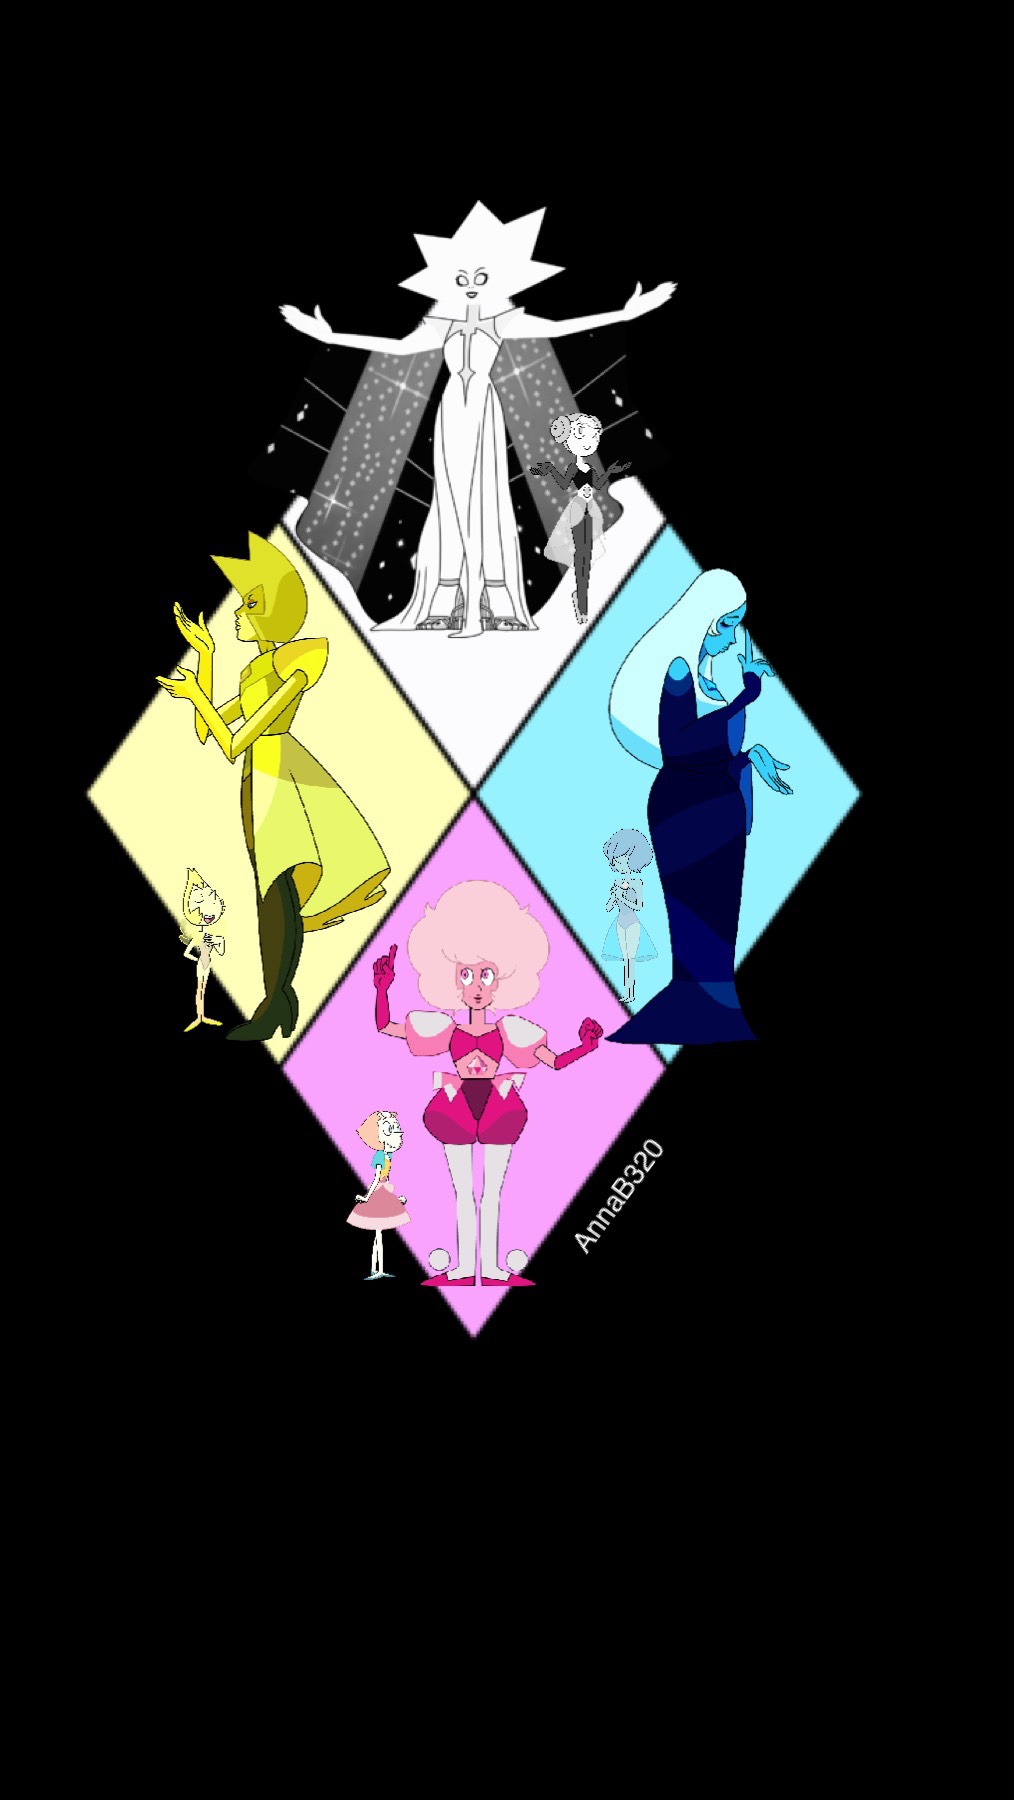 Who’s your favorite diamond?